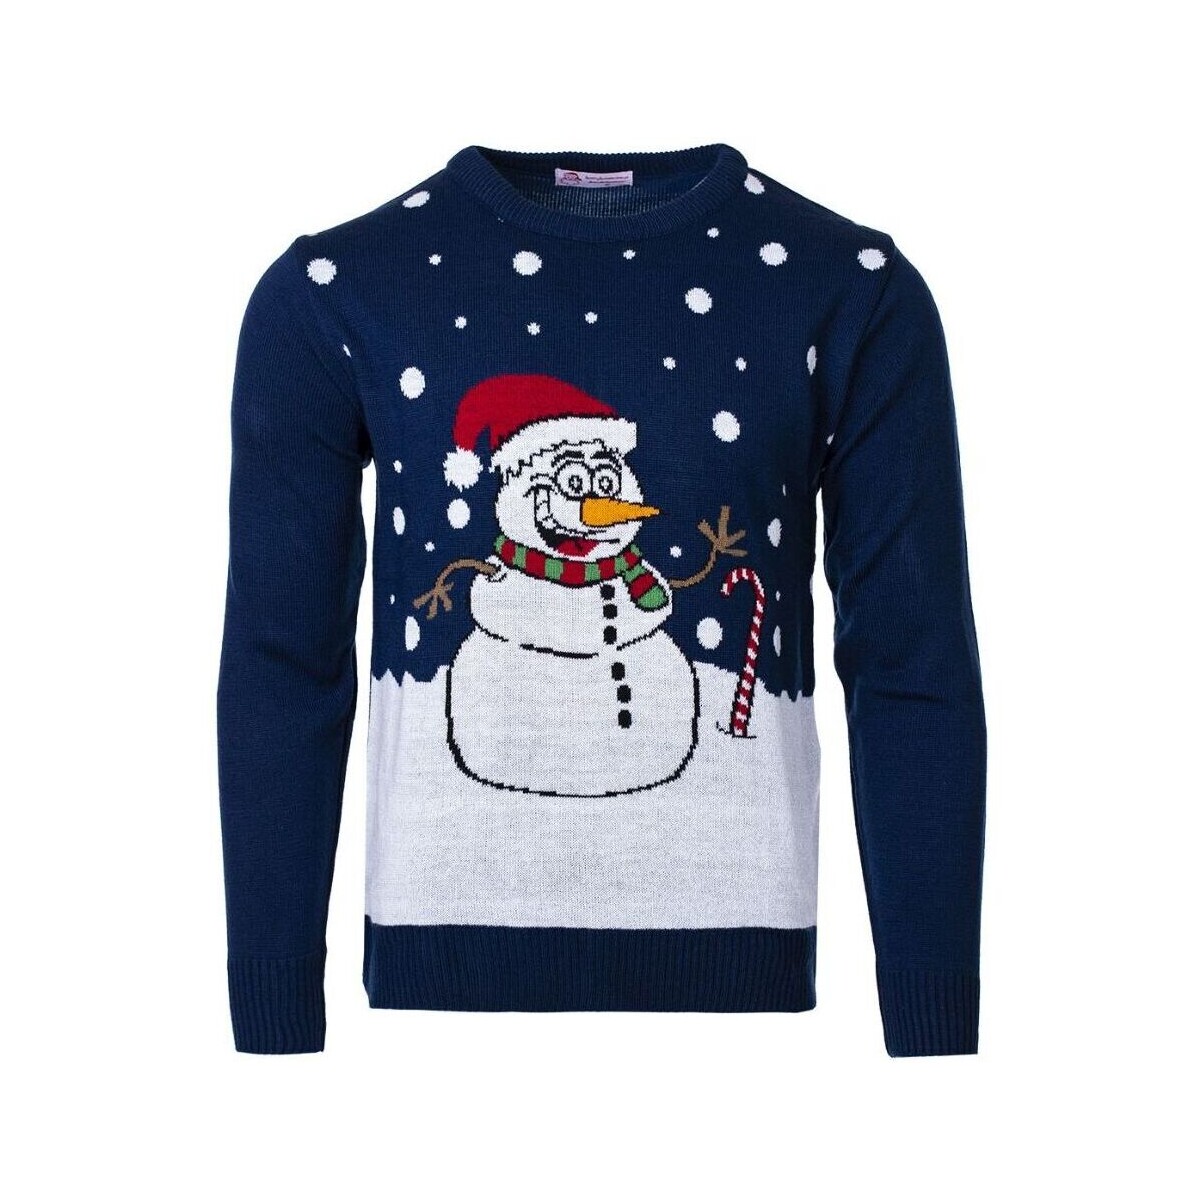 Textil Svetry Wayfarer Vánoční svetr Snowman tmavě modrý Bílá/Modrá tmavá